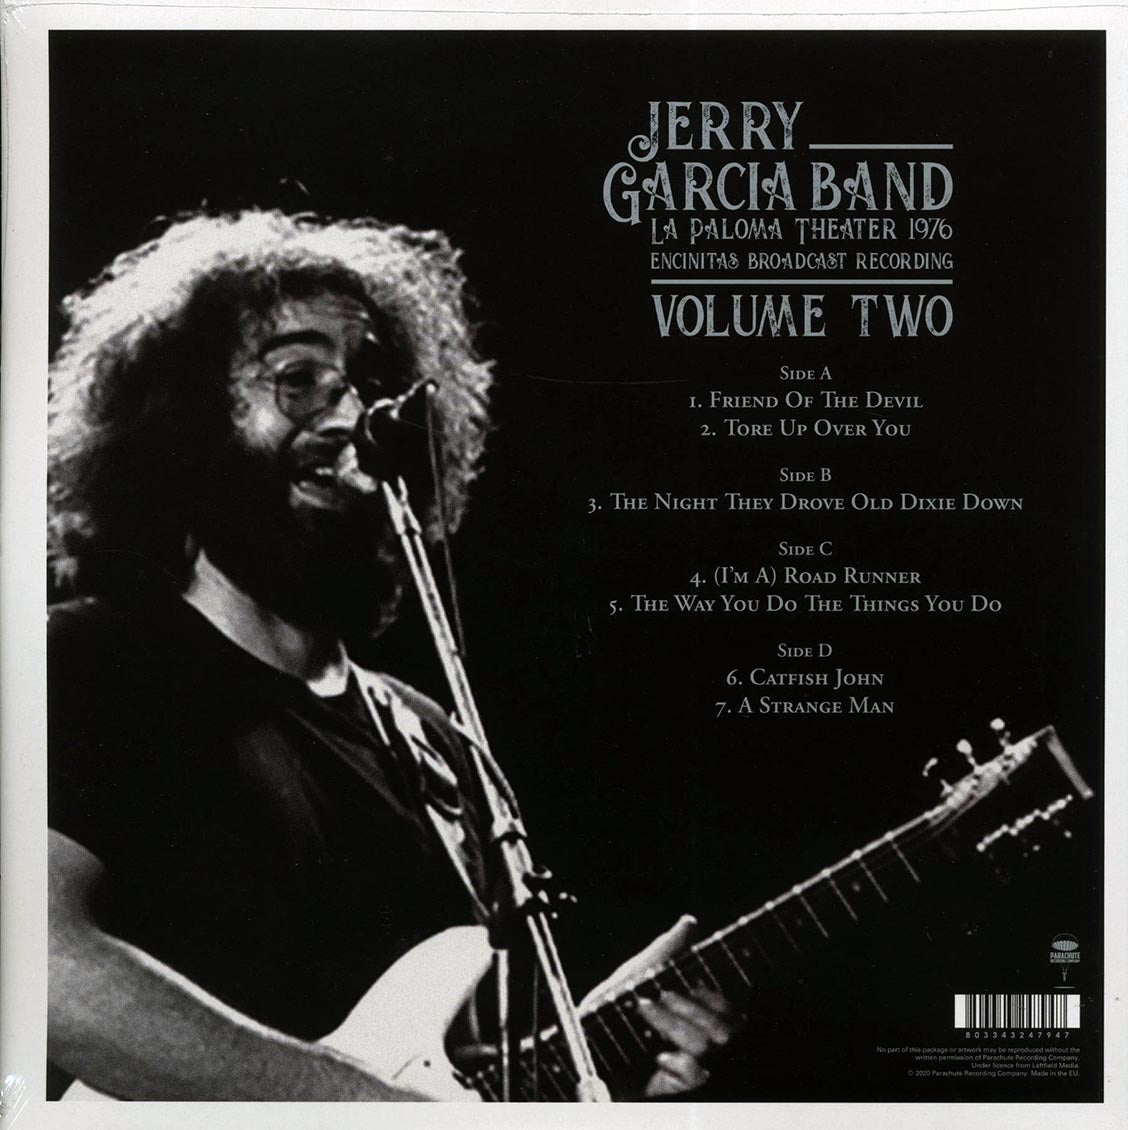 The Jerry Garcia Band - La Paloma Theater 1976 Volume 2: Encinitas Broadcast Recording (2xLP) - Vinyl LP, LP